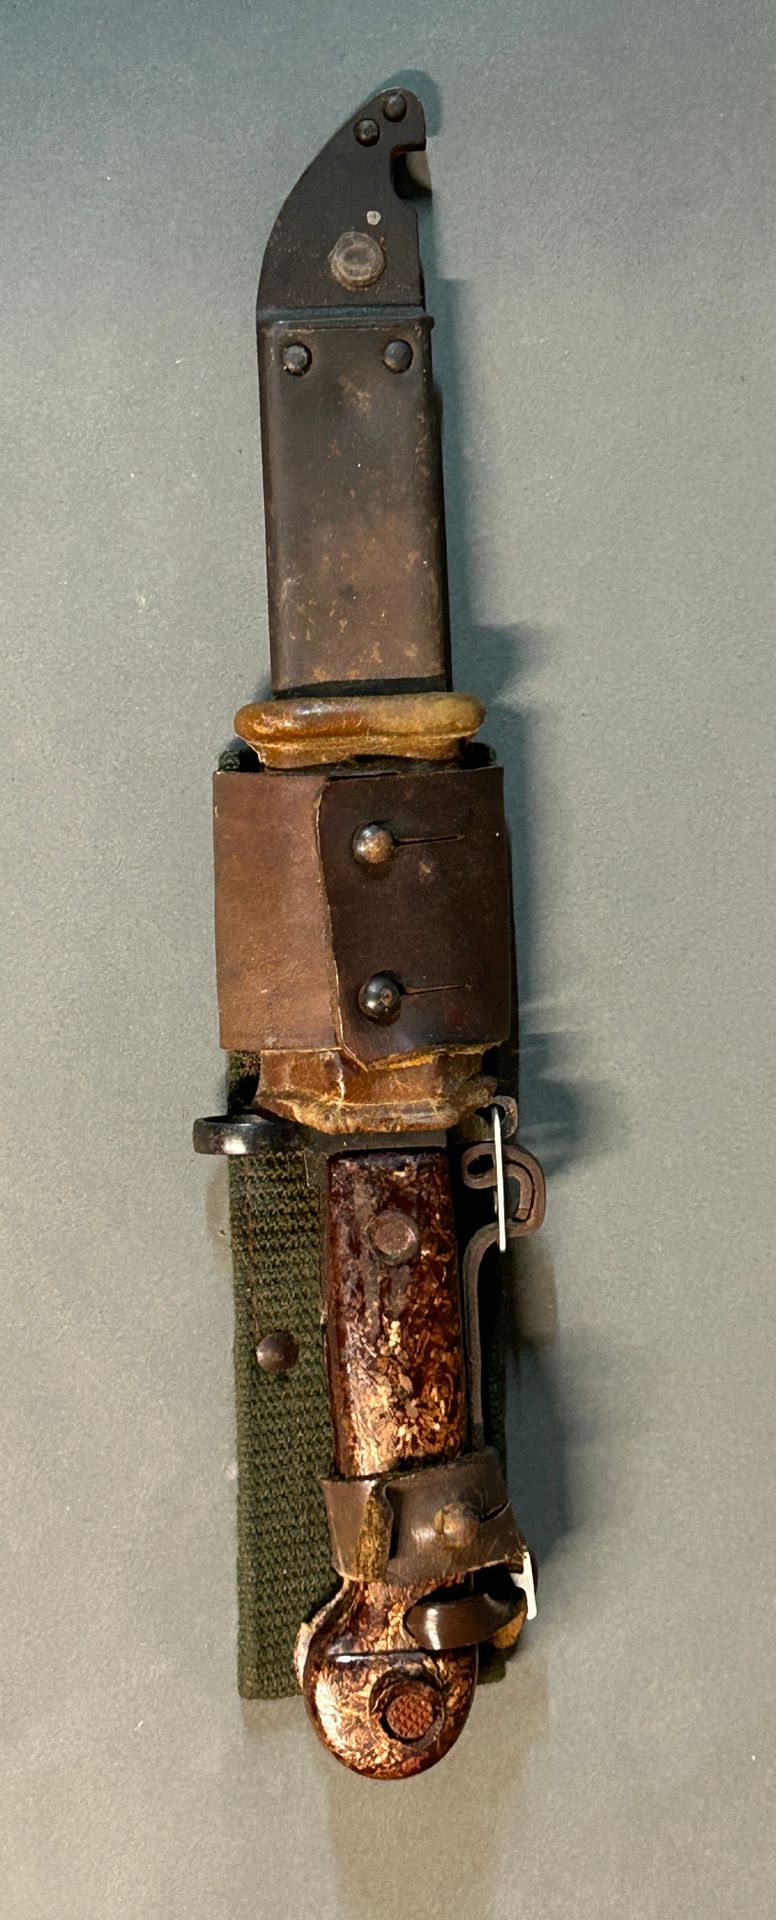 Null AK-47突击步枪的刺刀。

带挂绳的电木框架。

刀片背面有缺口，有一个边缘和镂空，可作为与刀鞘的夹子。

铁制刀鞘，配有皮带环。